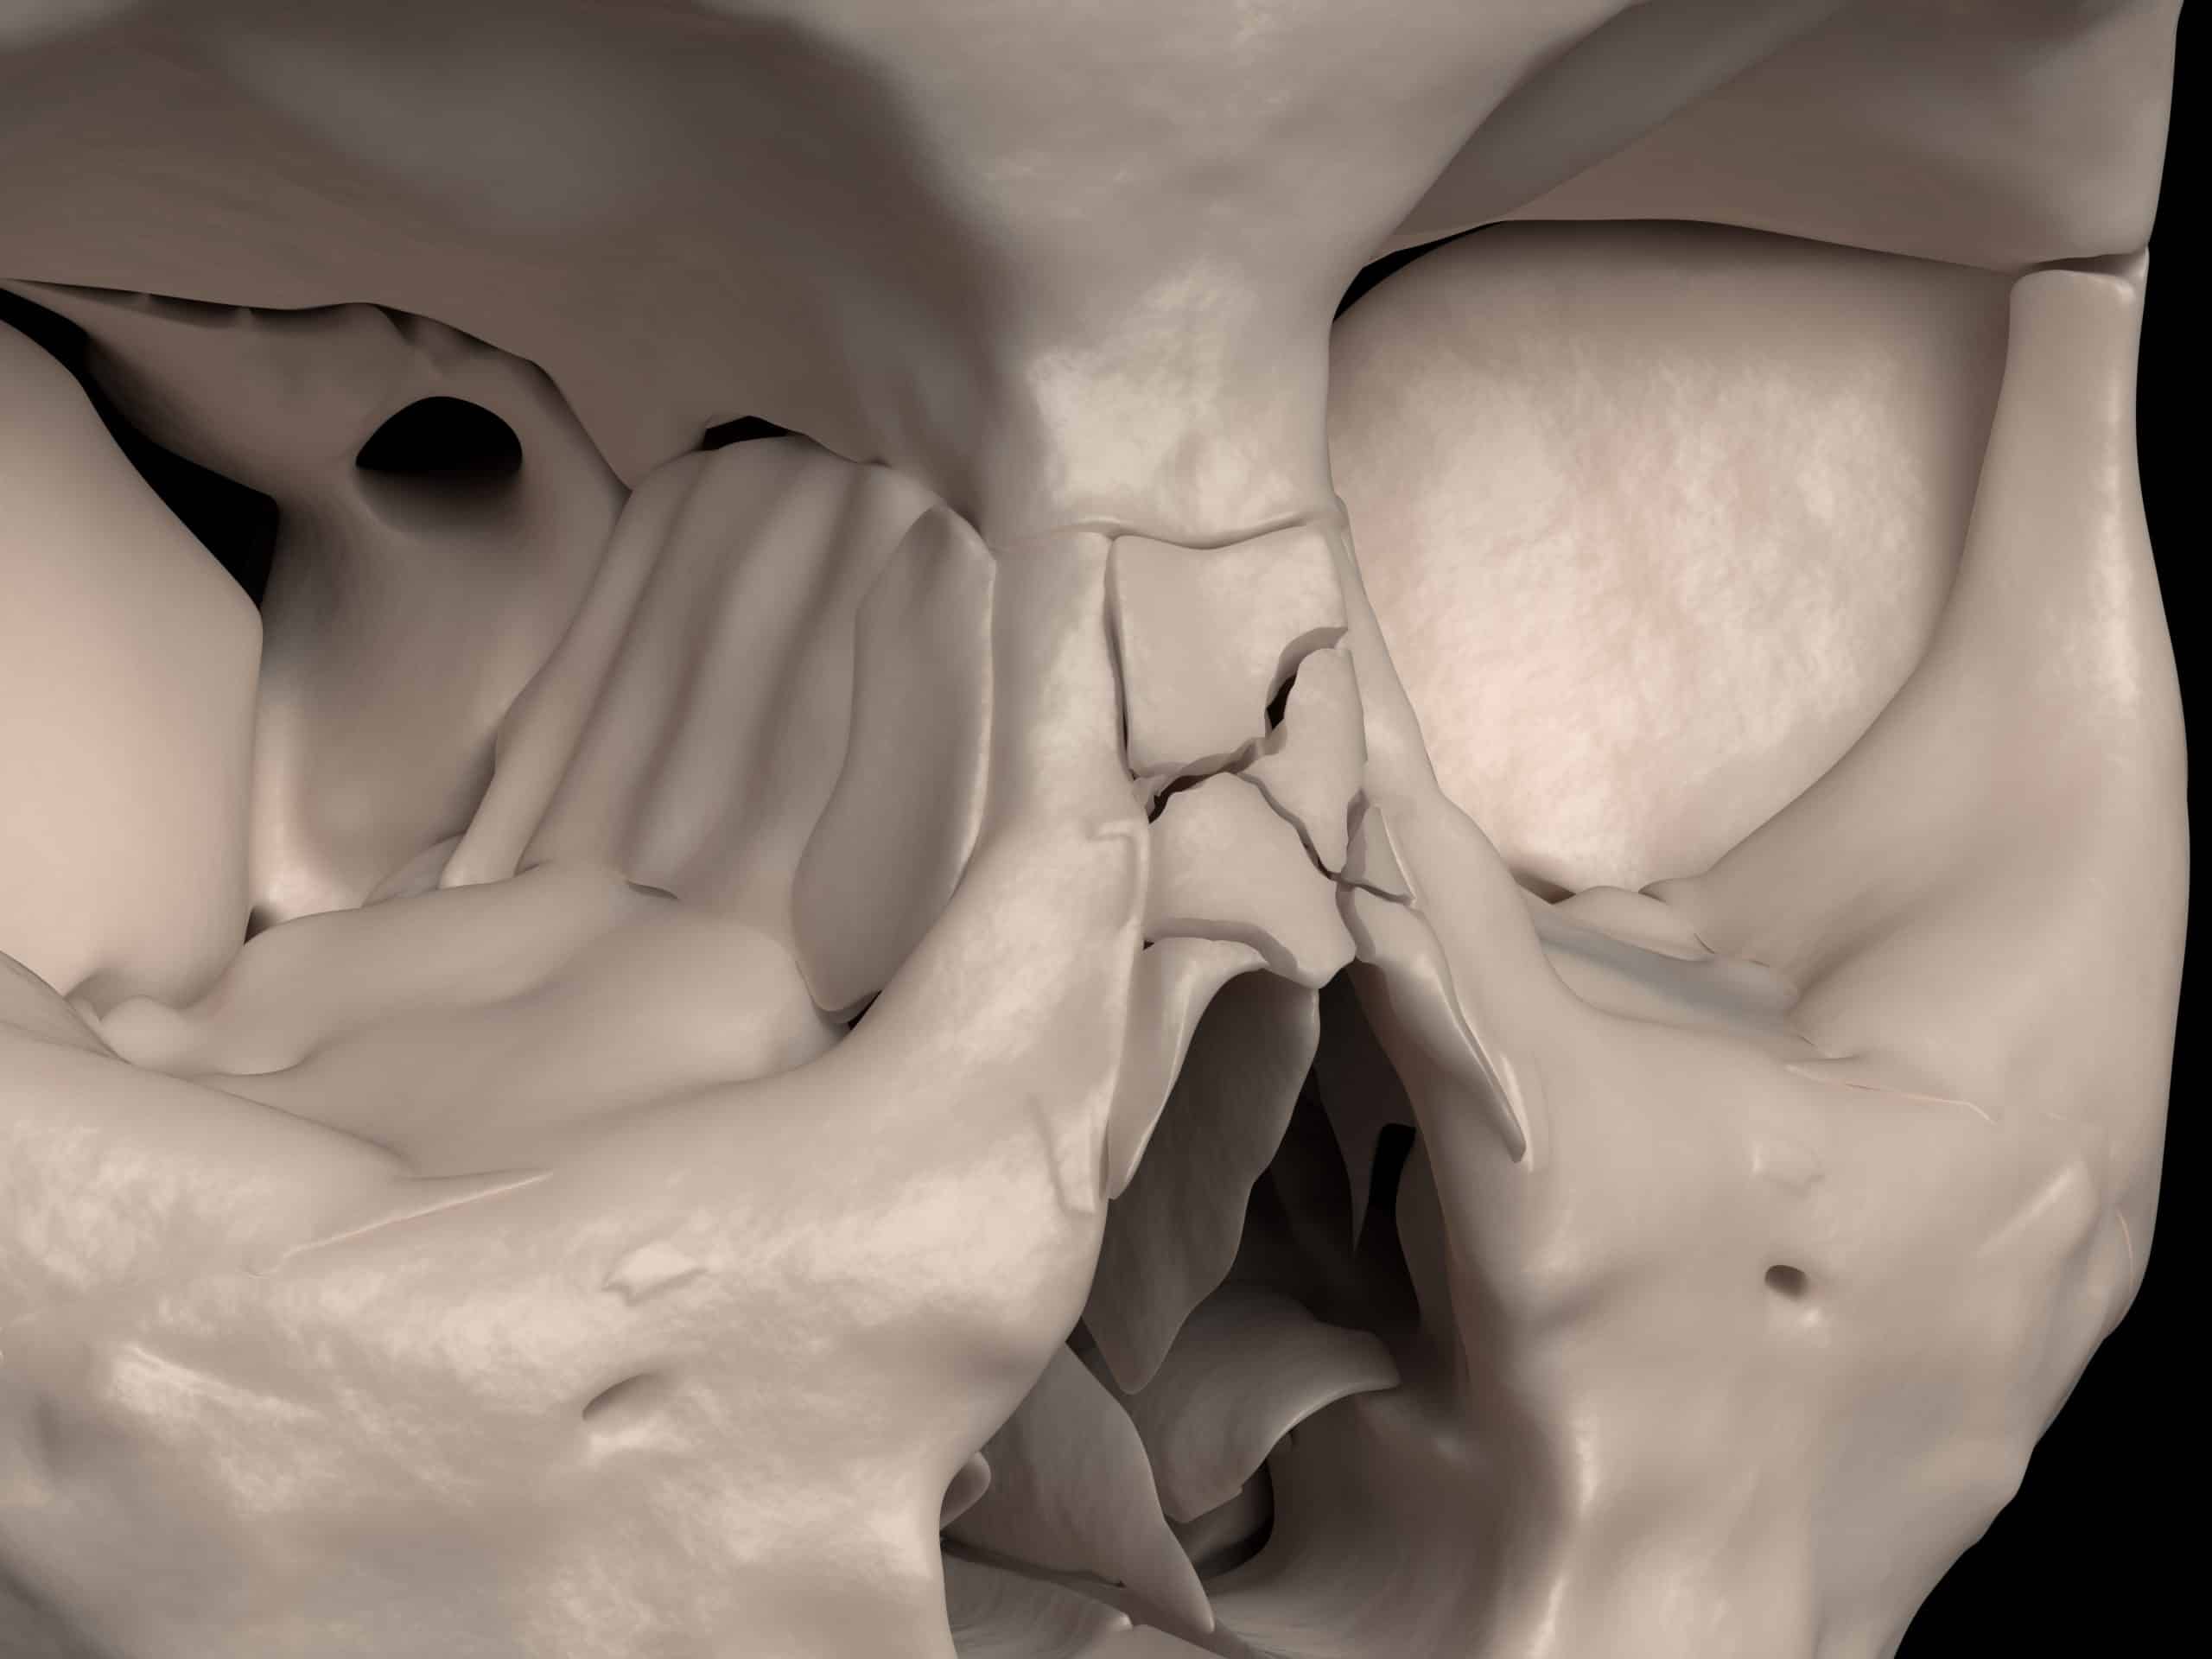 Bones of the Skull - Structure - Fractures - TeachMeAnatomy